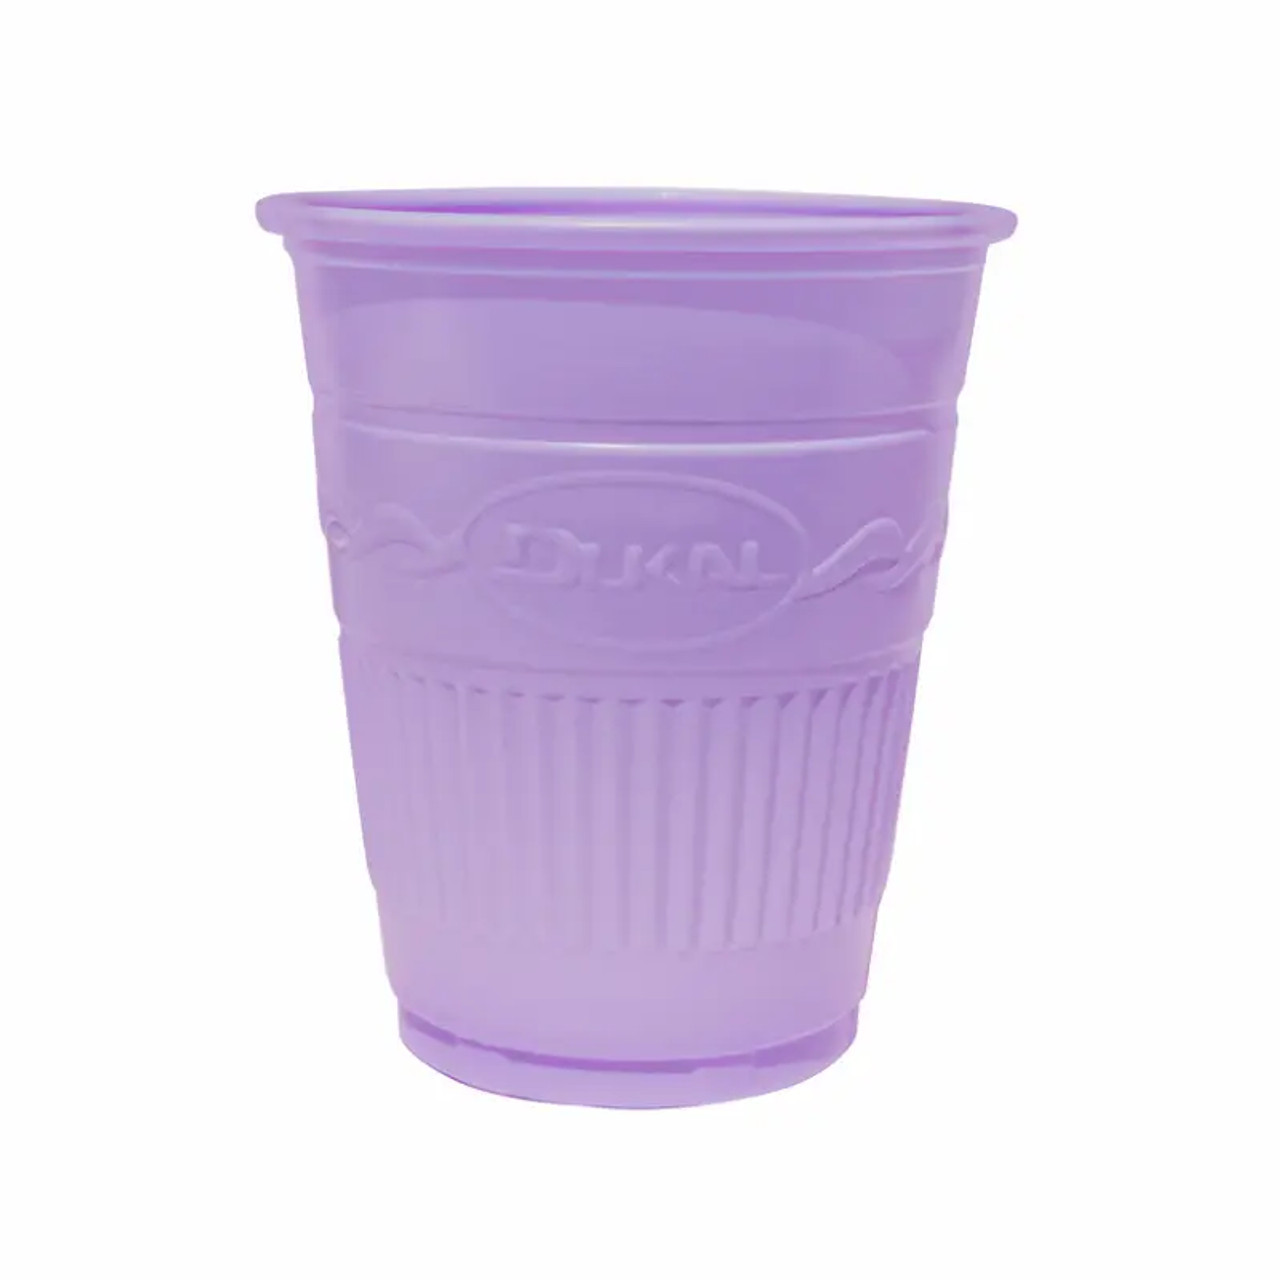 Dukal Unipack Plastic Drinking Cups 5 oz. Lavender 1000/cs